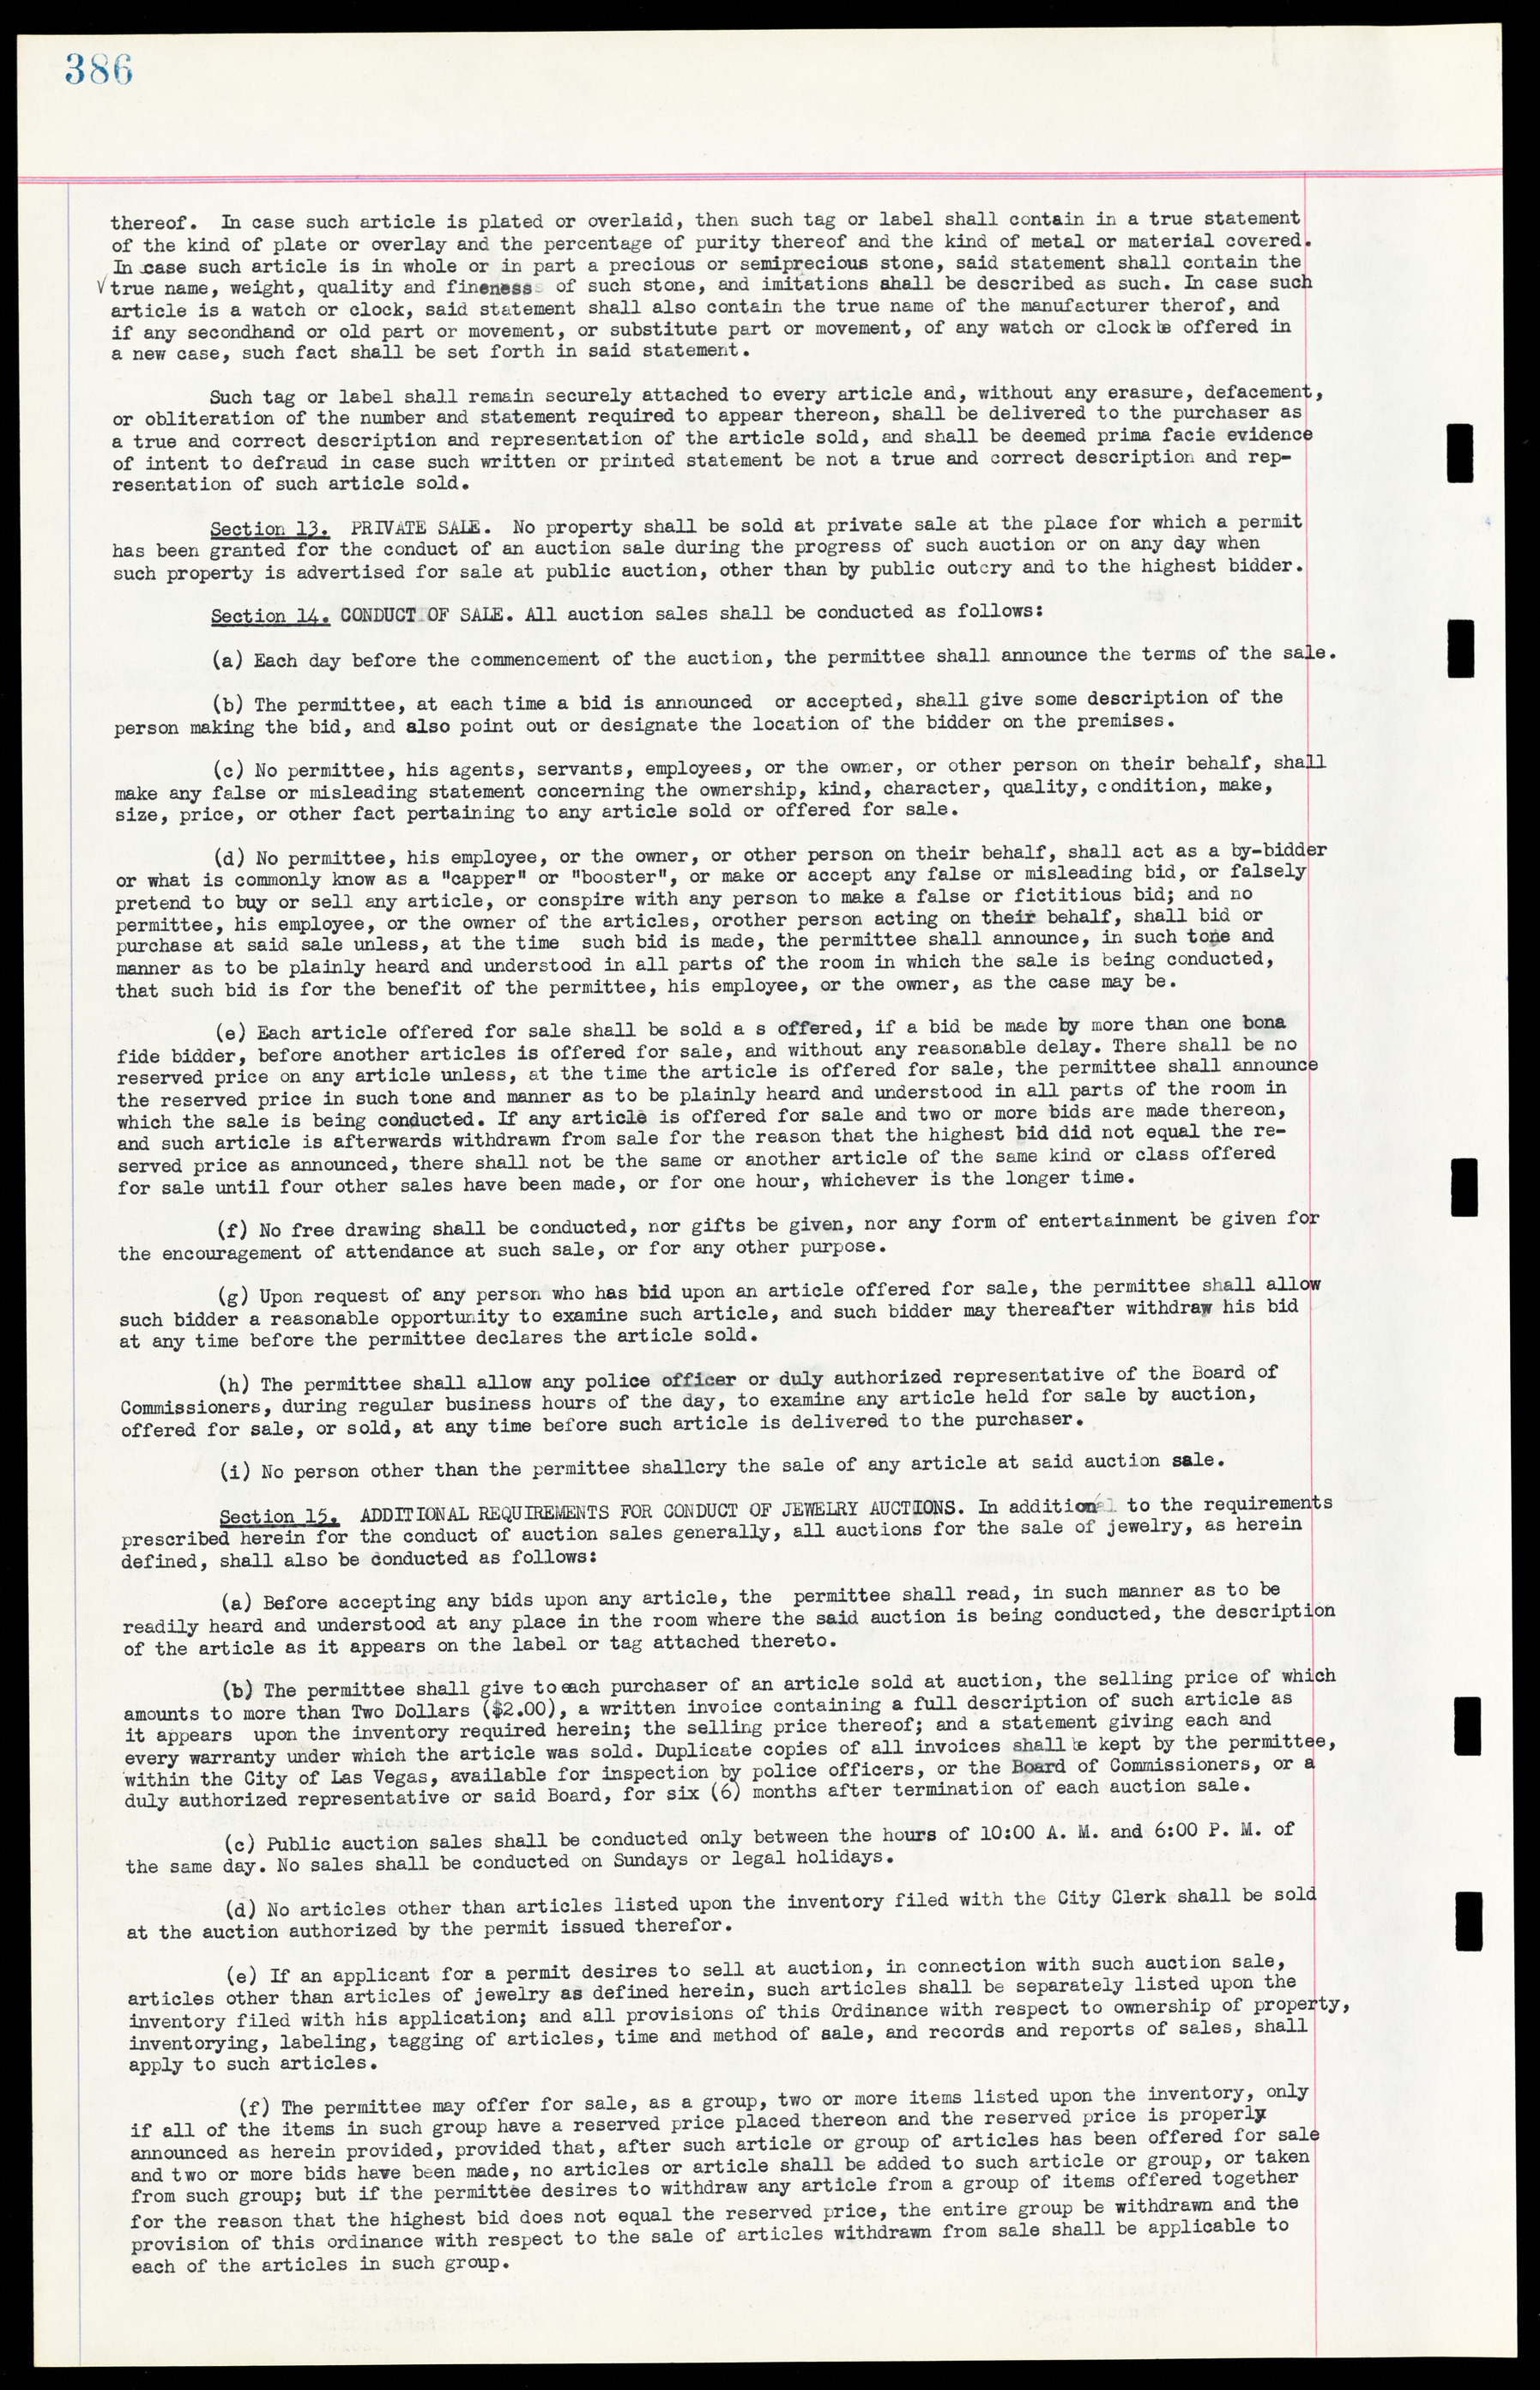 Las Vegas City Ordinances, March 31, 1933 to October 25, 1950, lvc000014-415